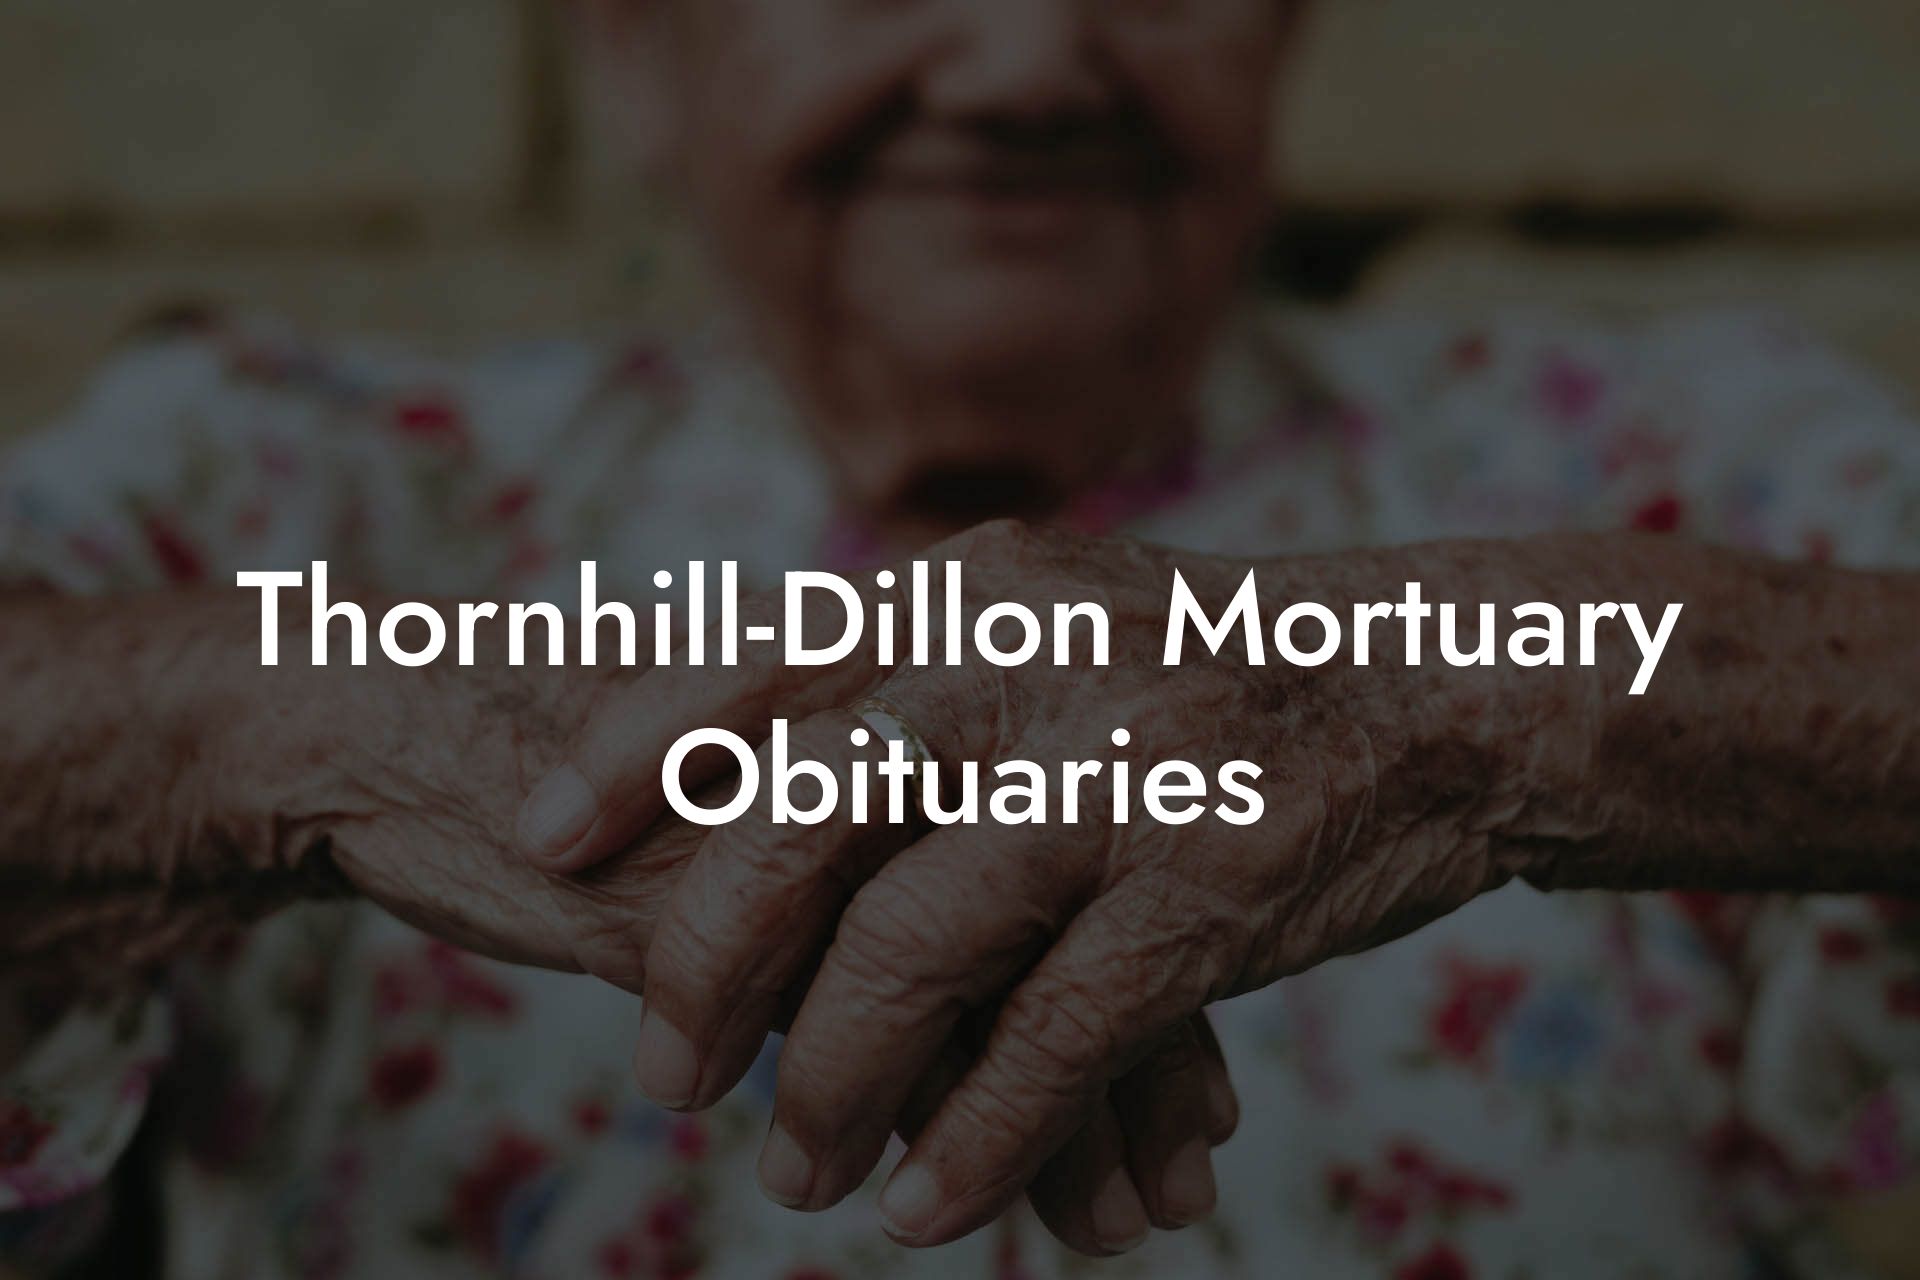 Thornhill-Dillon Mortuary Obituaries